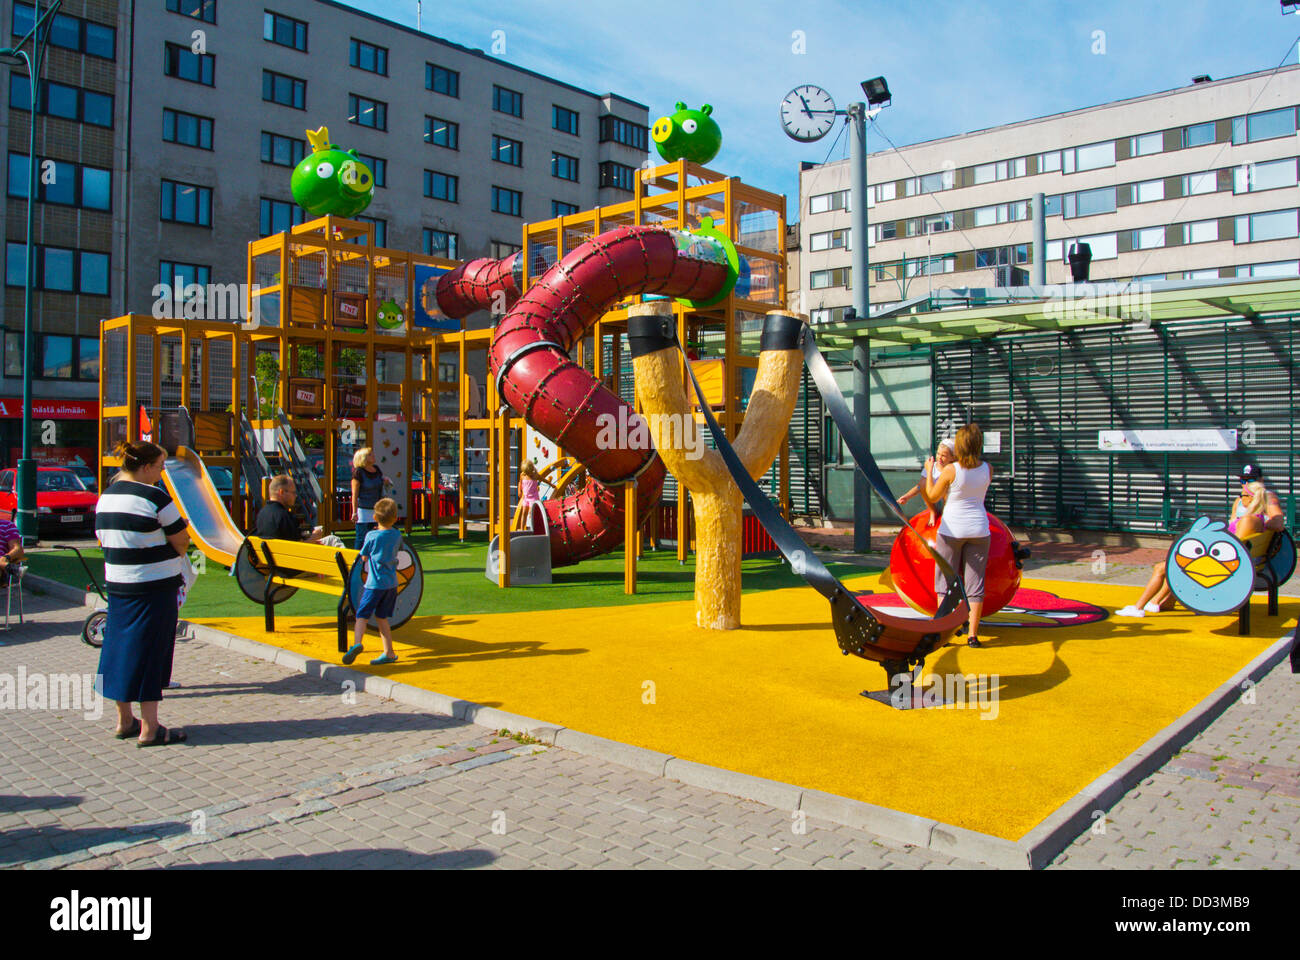 Angry Birds theme playground for children Kauppatori the market square Pori Finland northern Europe Stock Photo